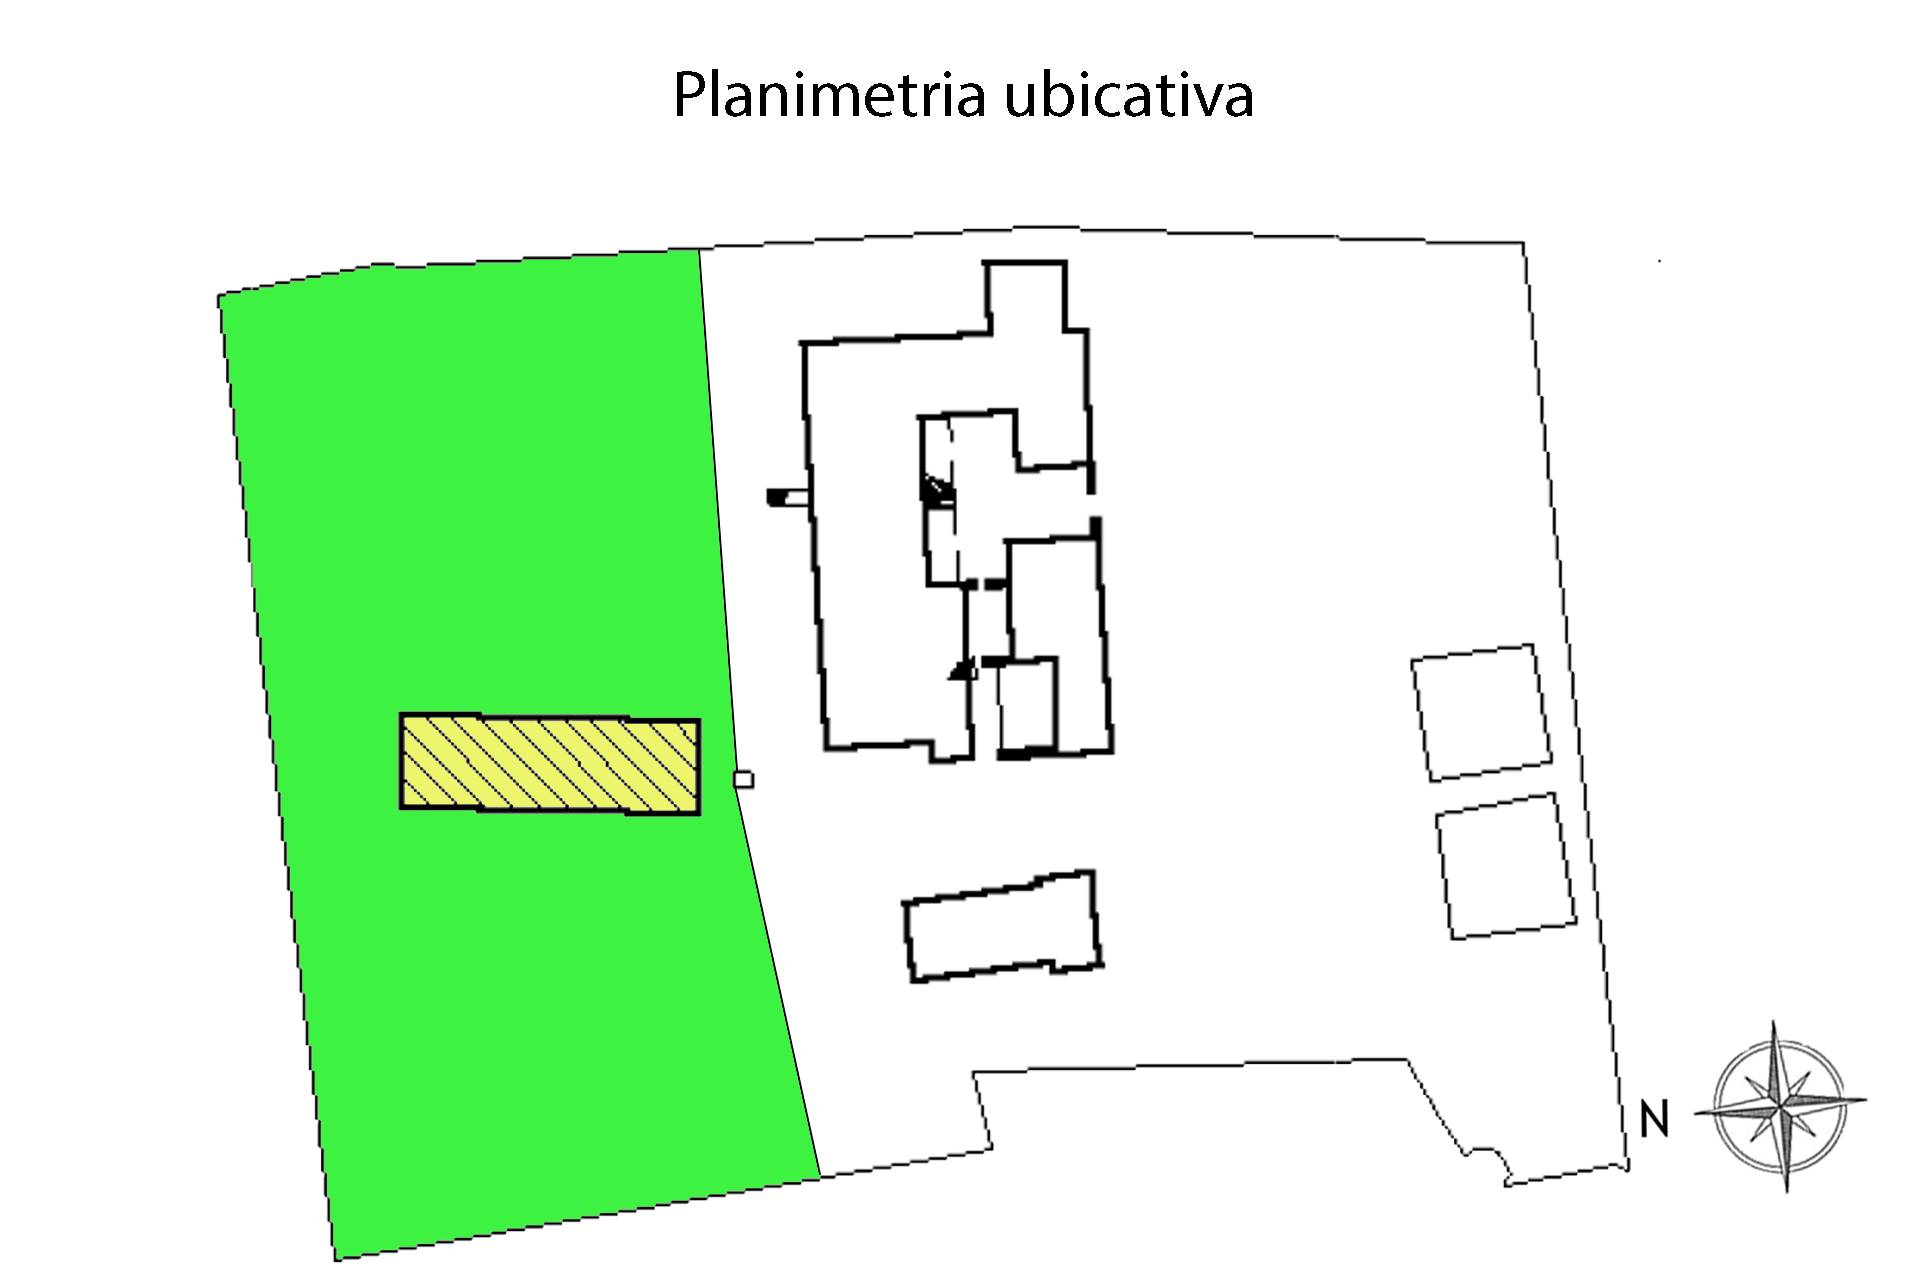 Planimetria ubicativa